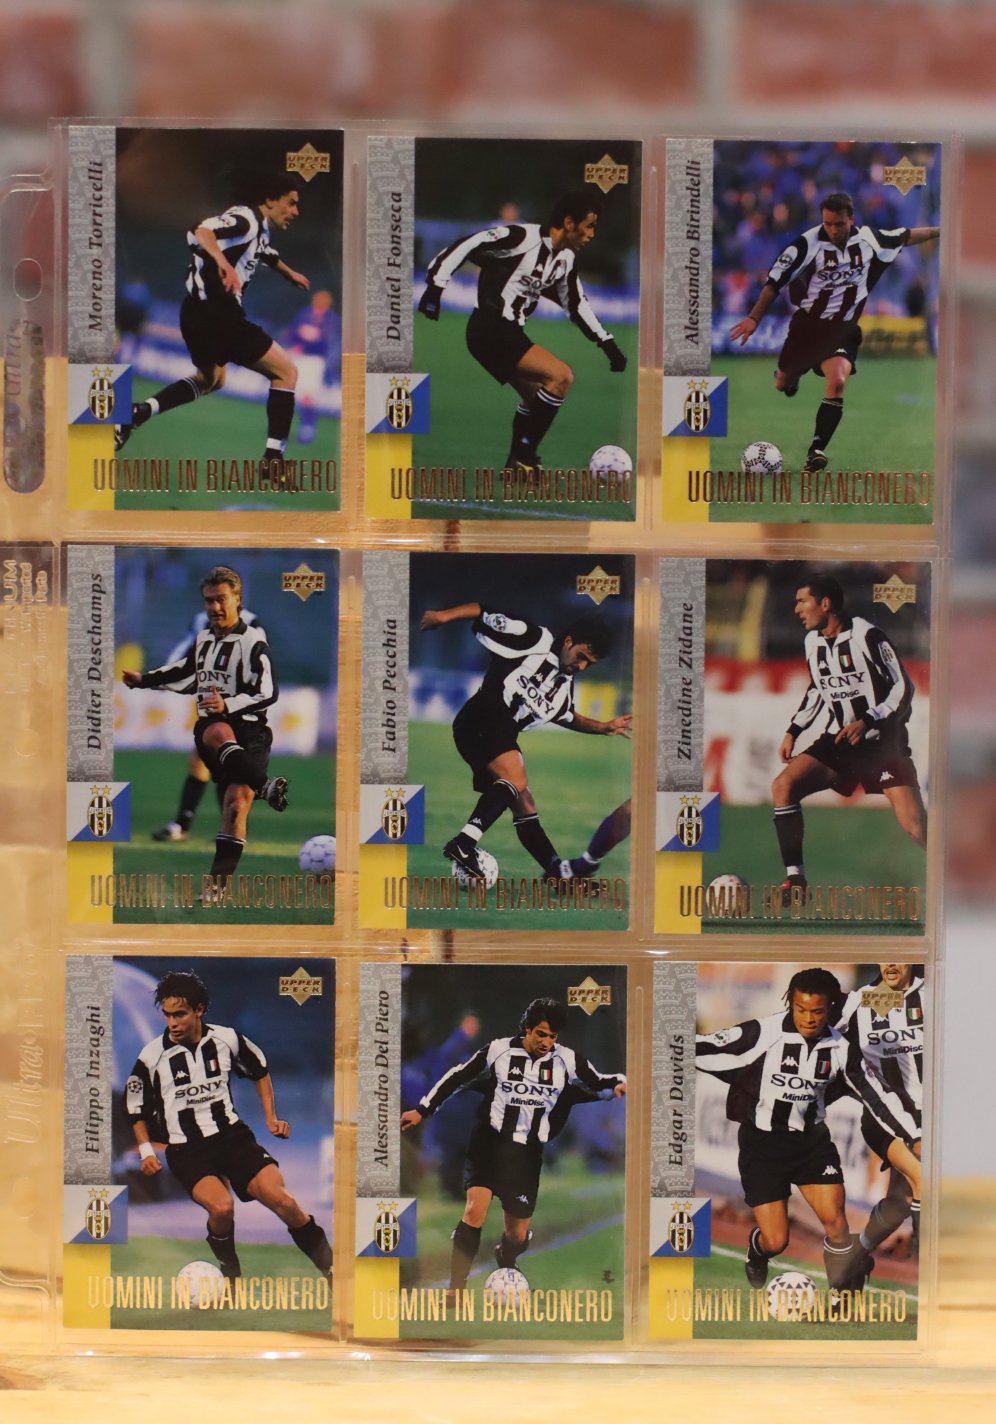 1998 Upper Deck Juventus Football Soccer Complete Set (90 Cards) Plus Bonus Inserts